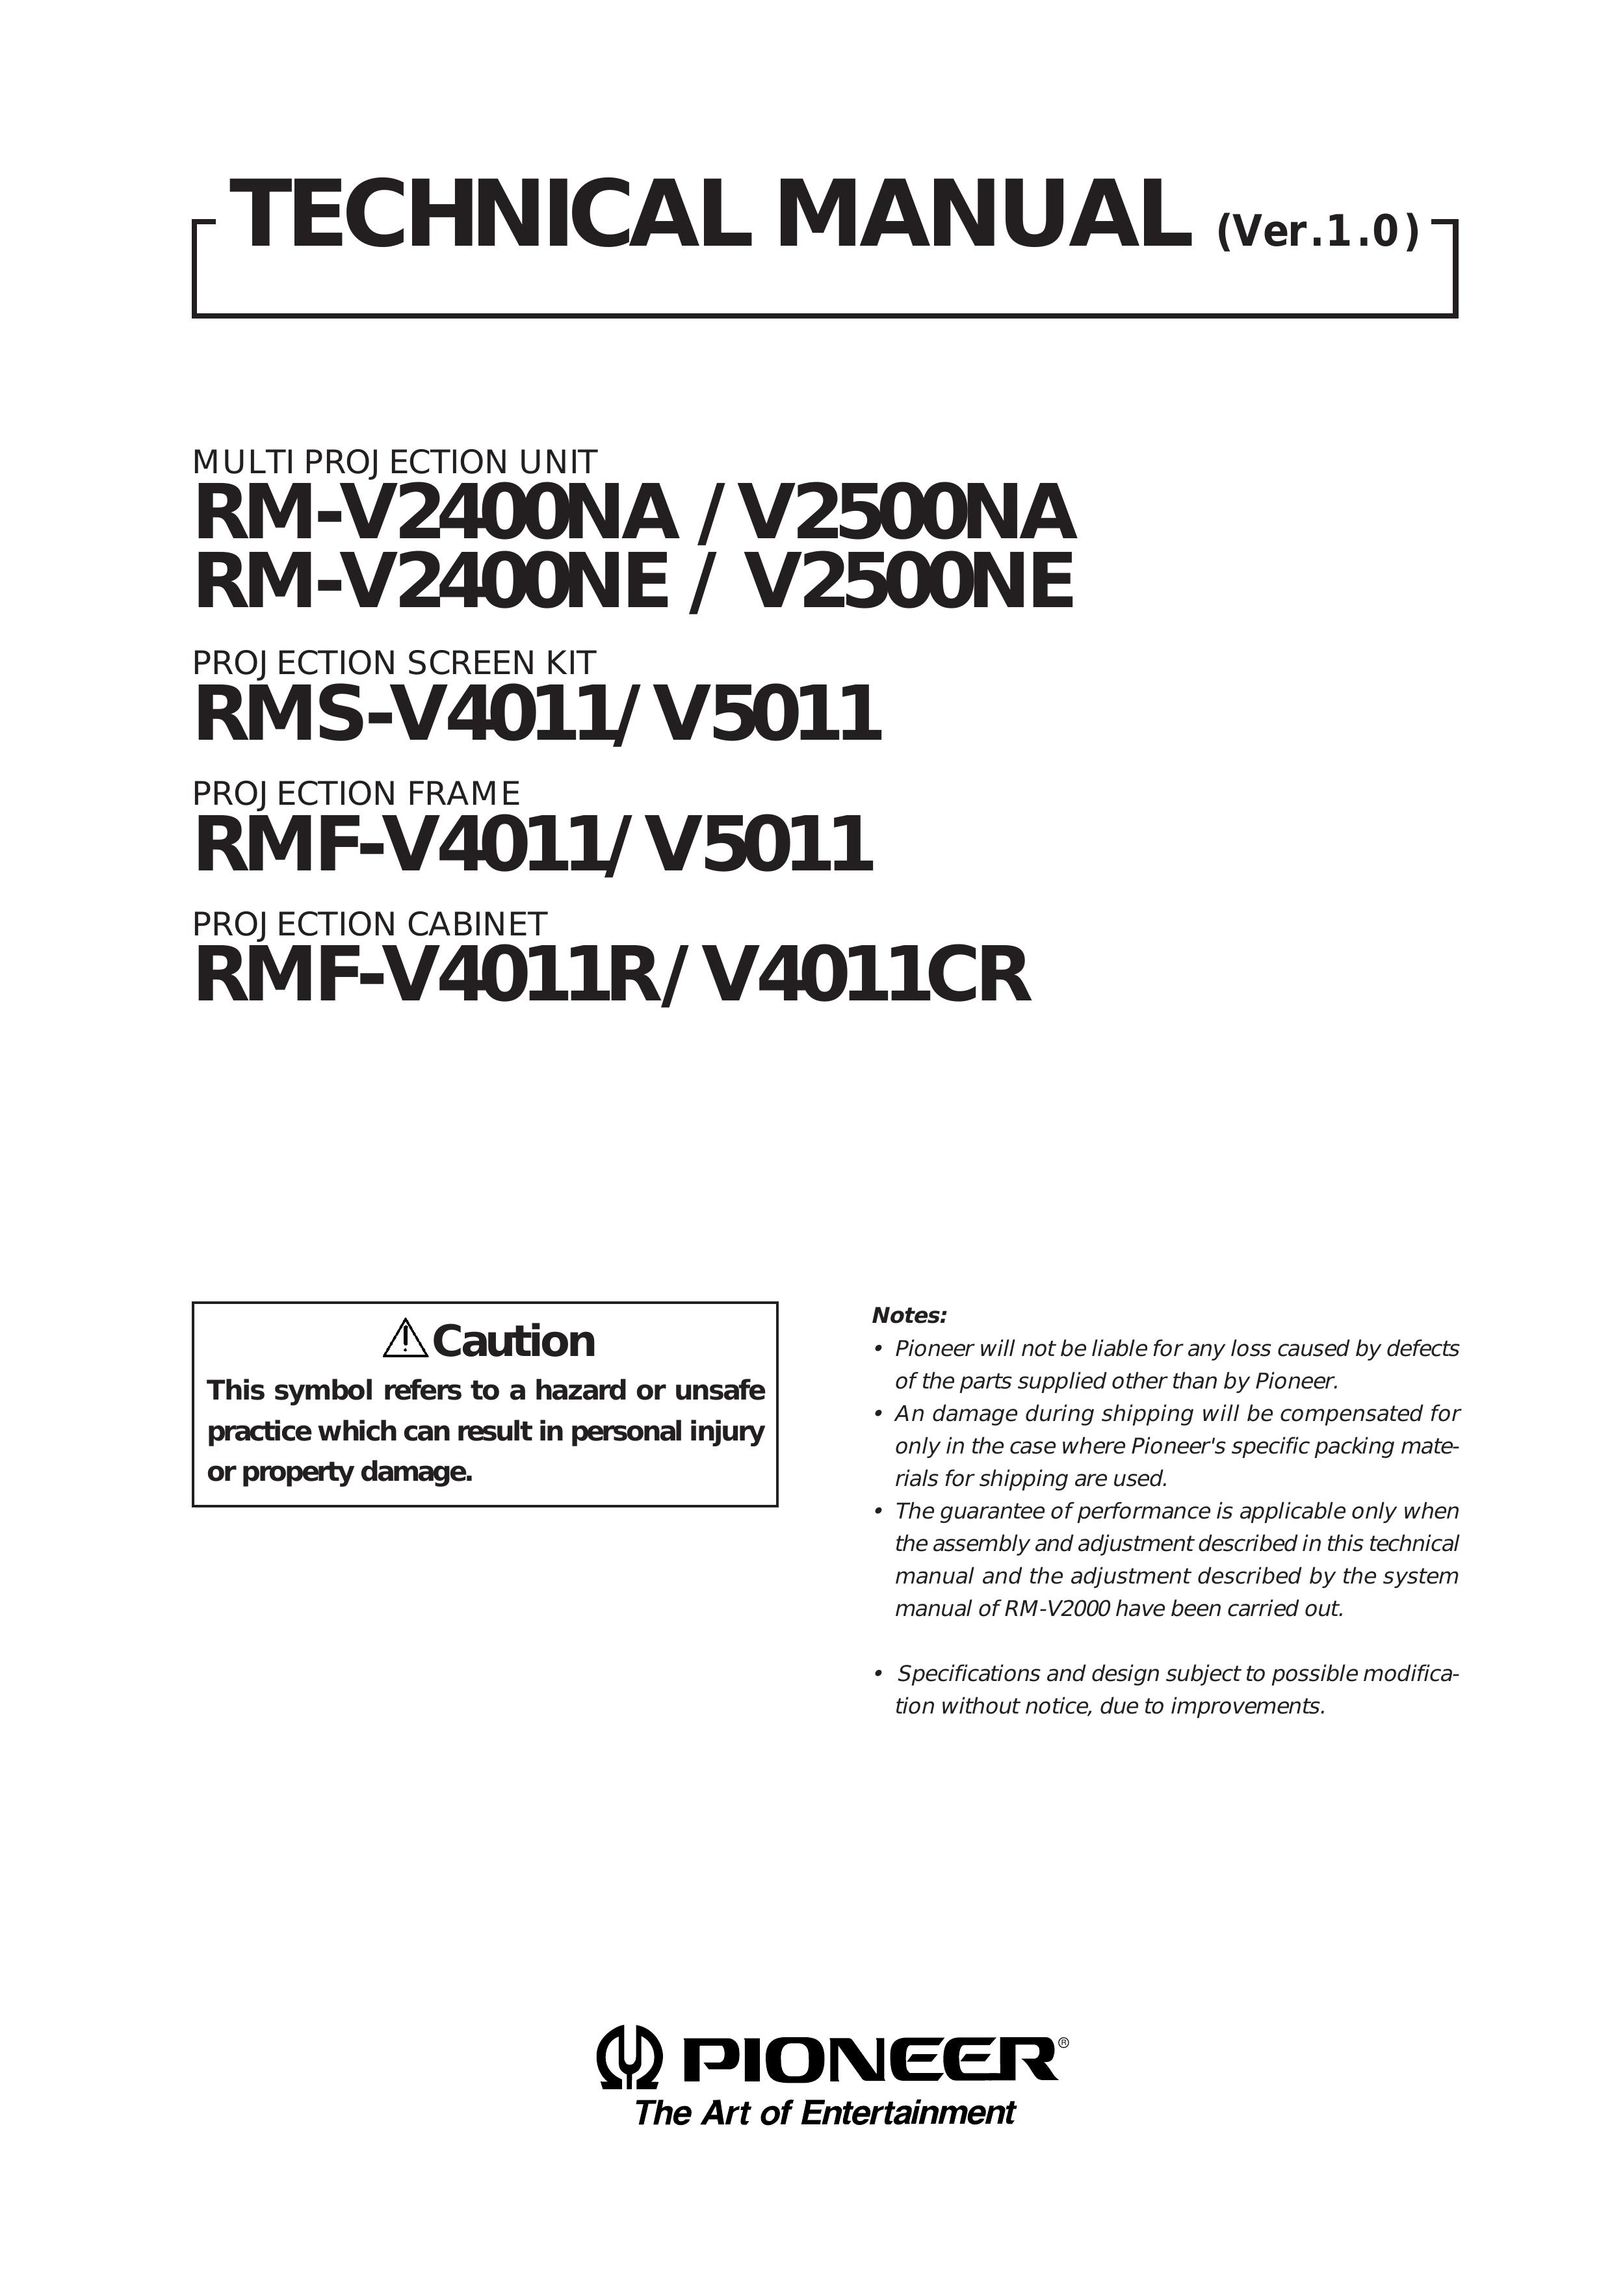 Pioneer RM-V2400 Projector User Manual